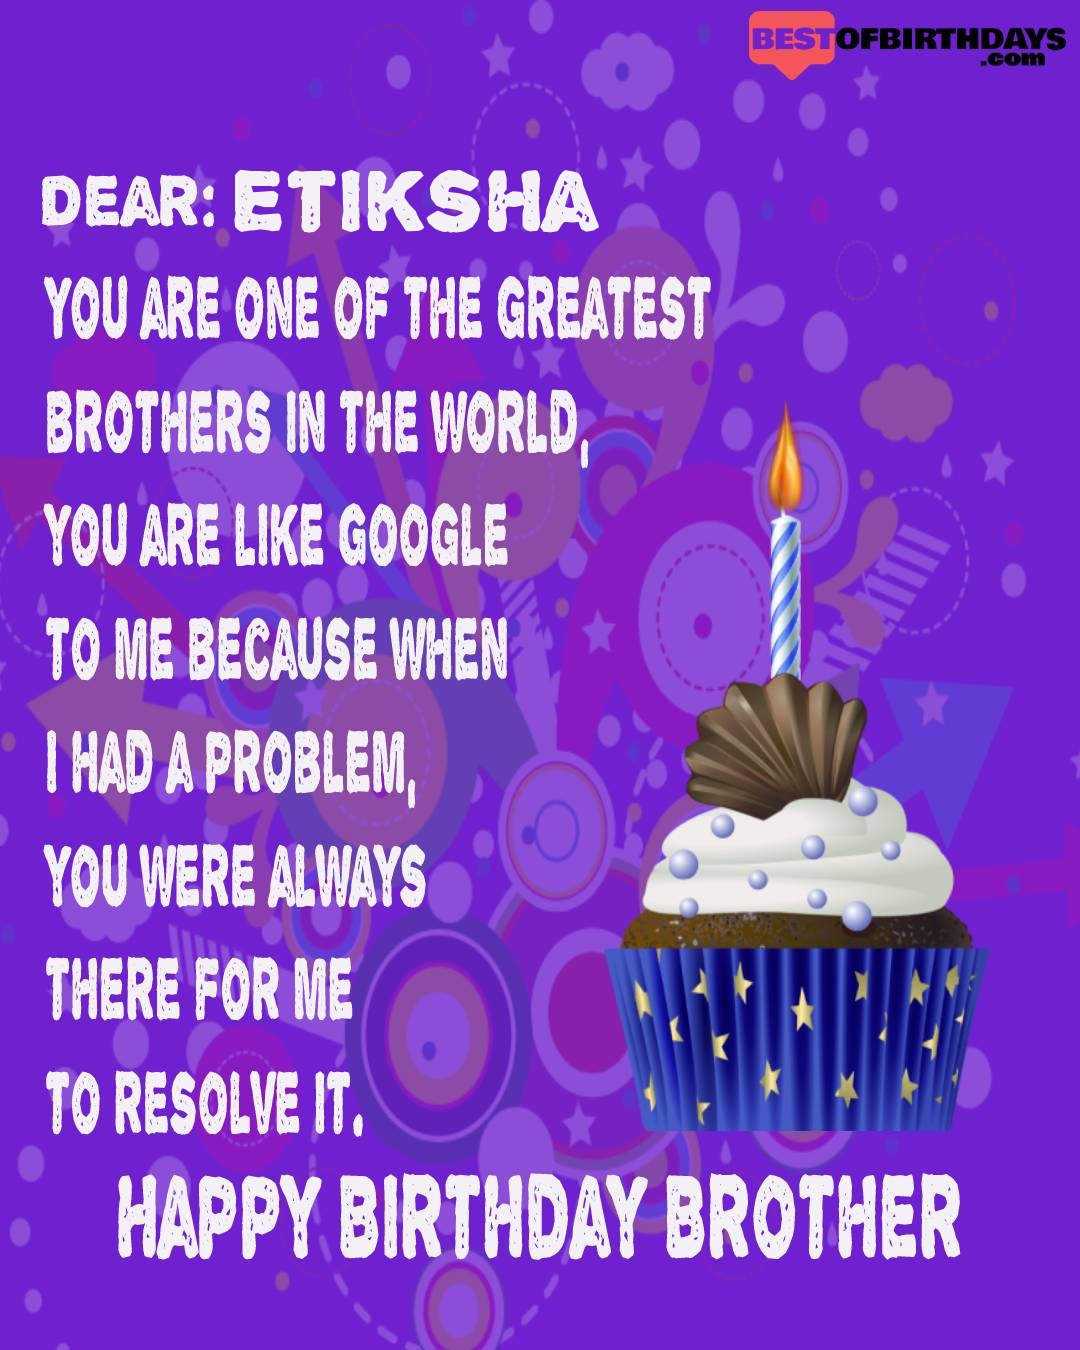 Happy birthday etiksha bhai brother bro